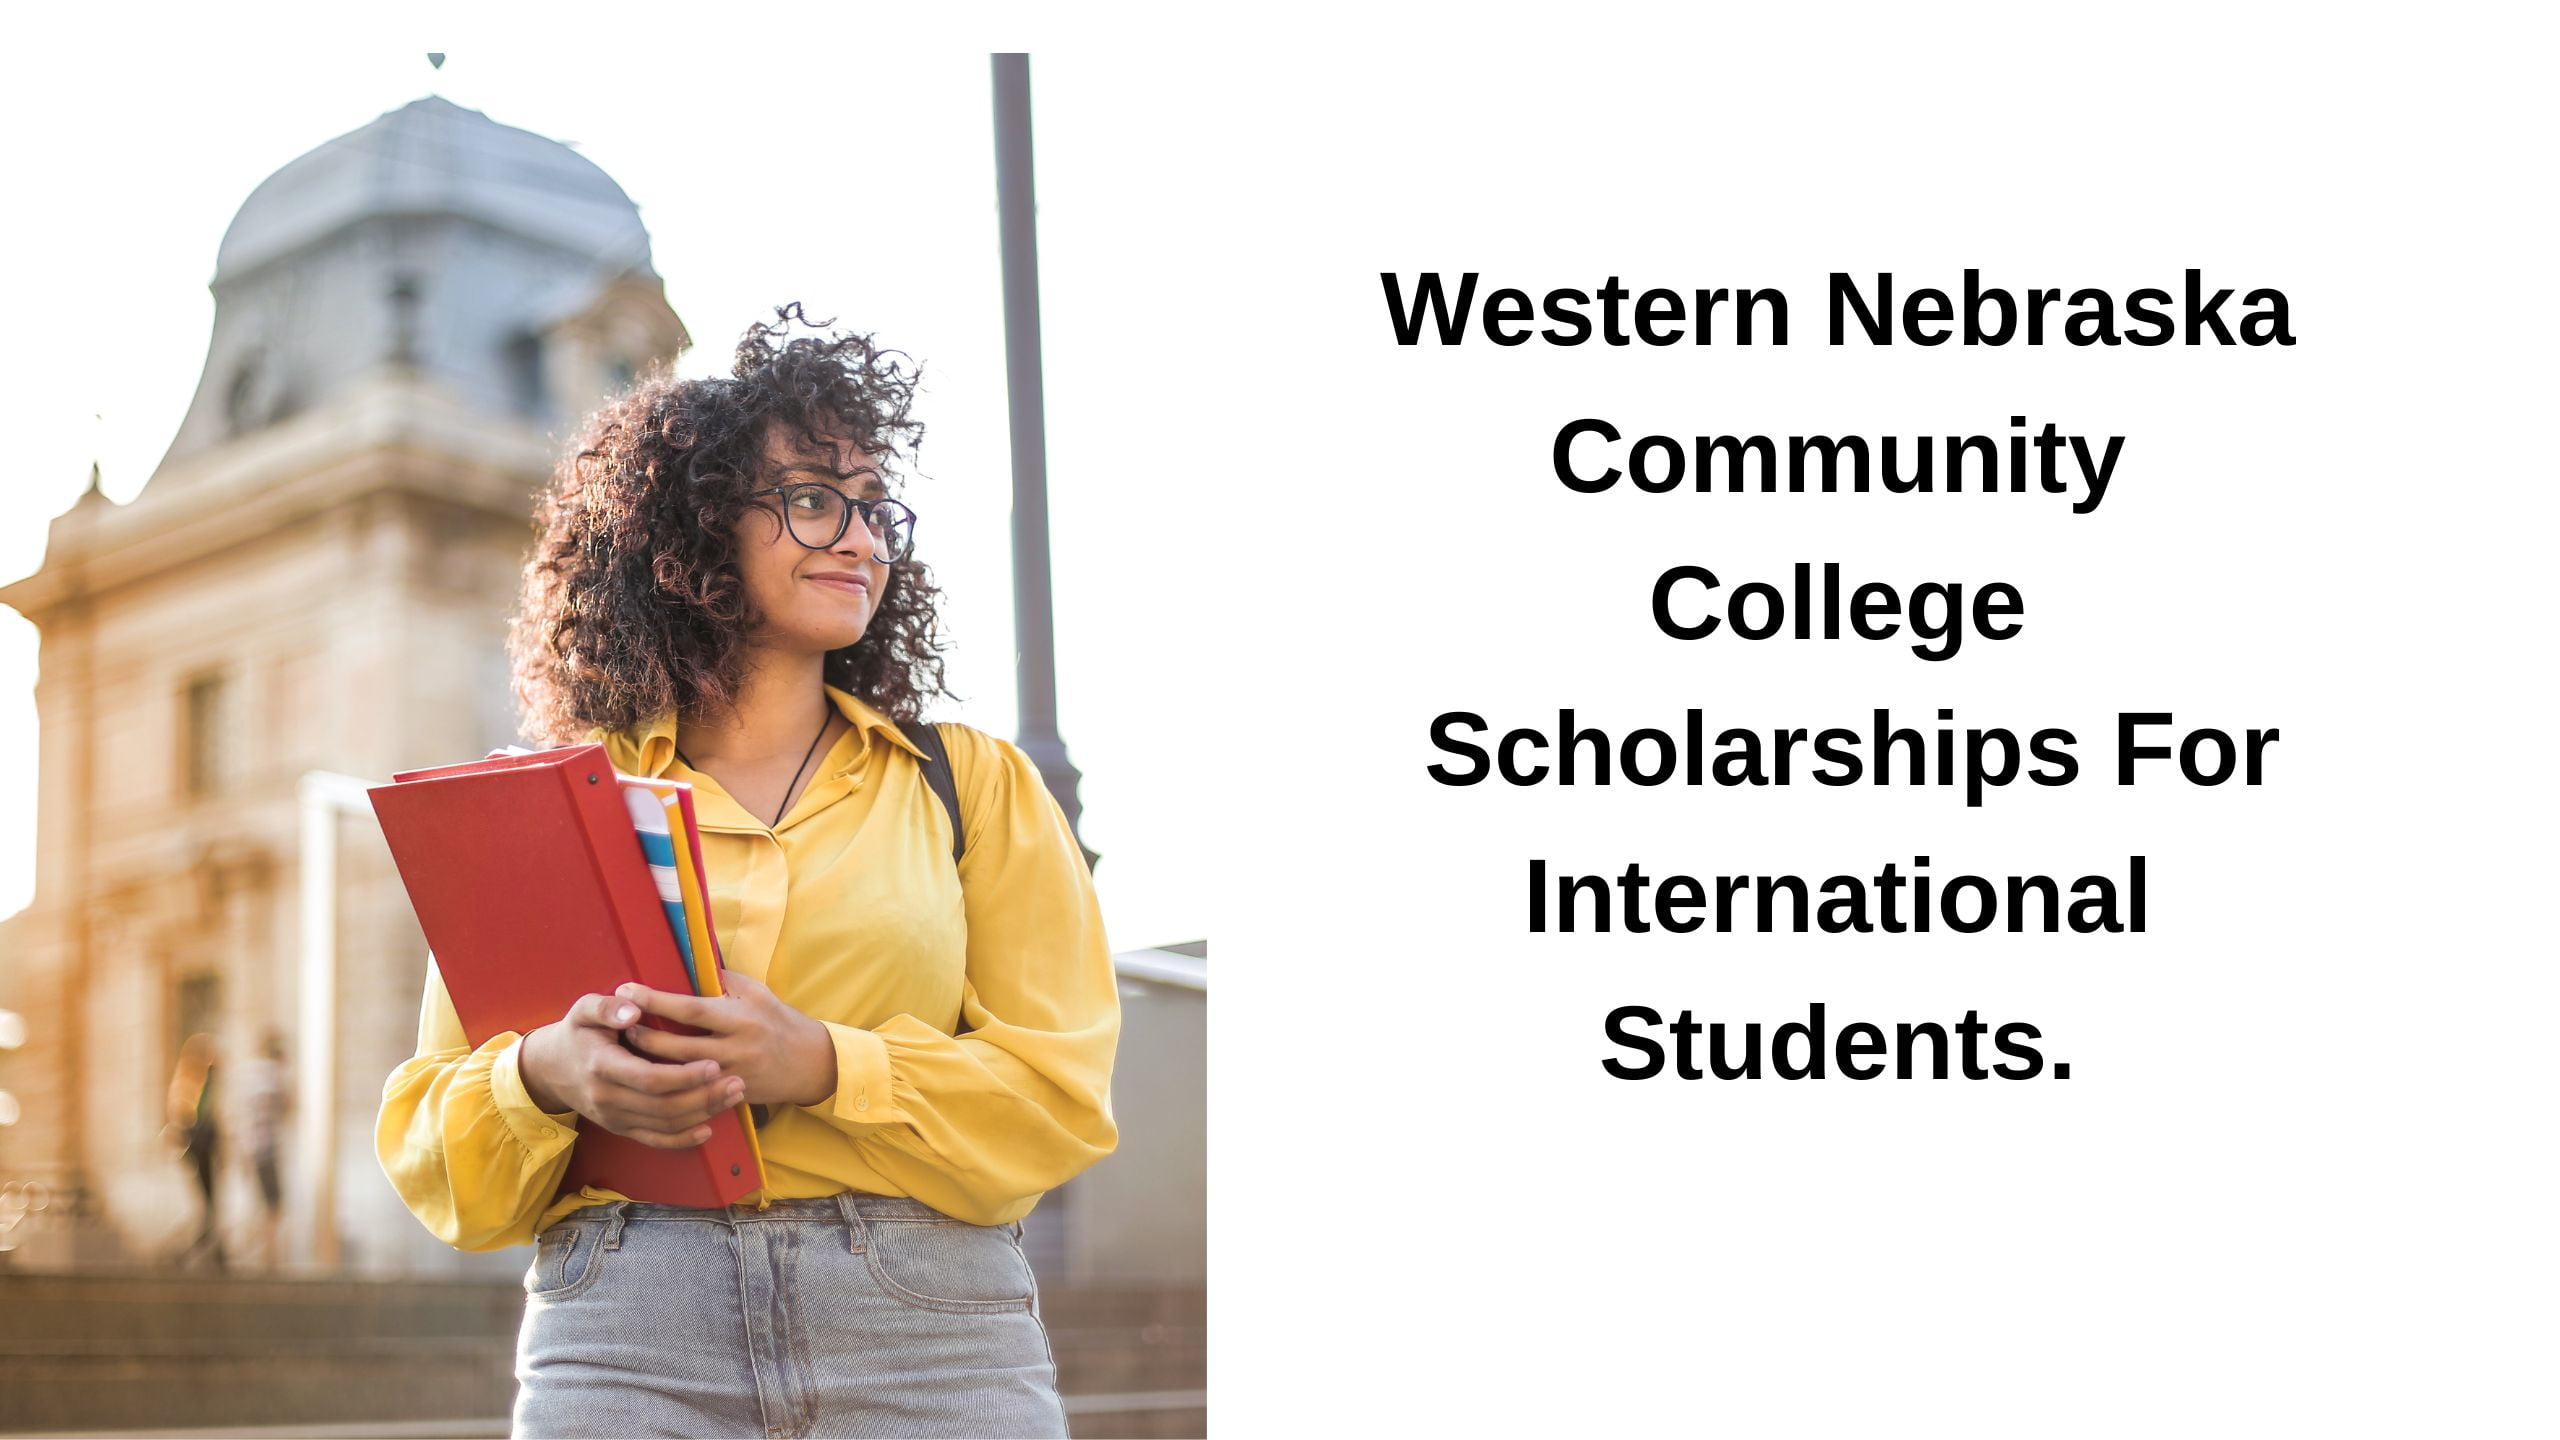 Western Nebraska Community College Scholarships For International Students.